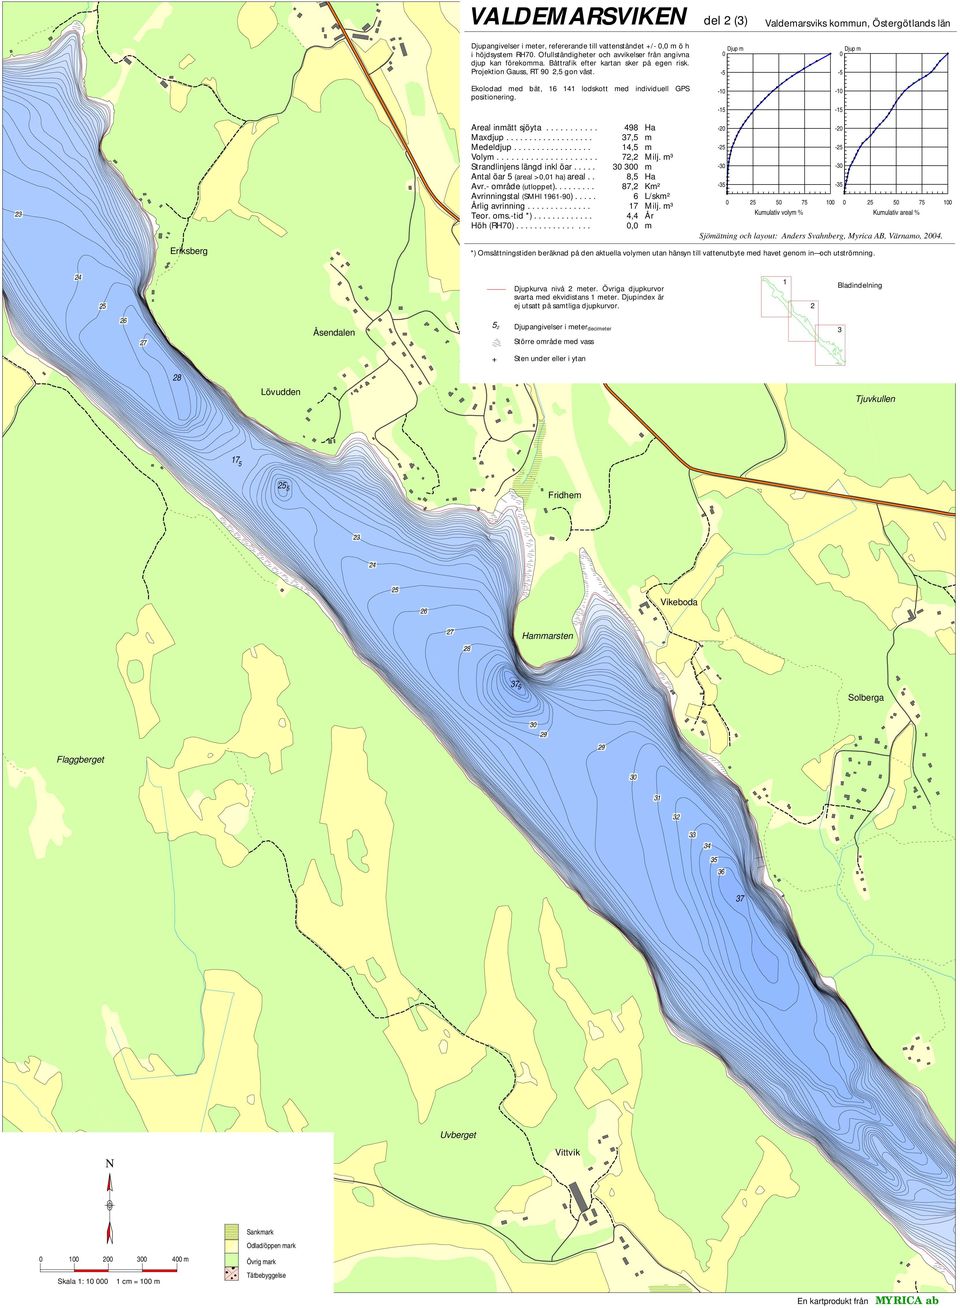 Ekolodad ed båt, lodskott ed individuell GPS Djup - Djup - Eriksberg Areal inätt sjöyta........... Voly..................... Antal öar 5 (areal >, ha) areal.. Avr.- oråde (utloppet).